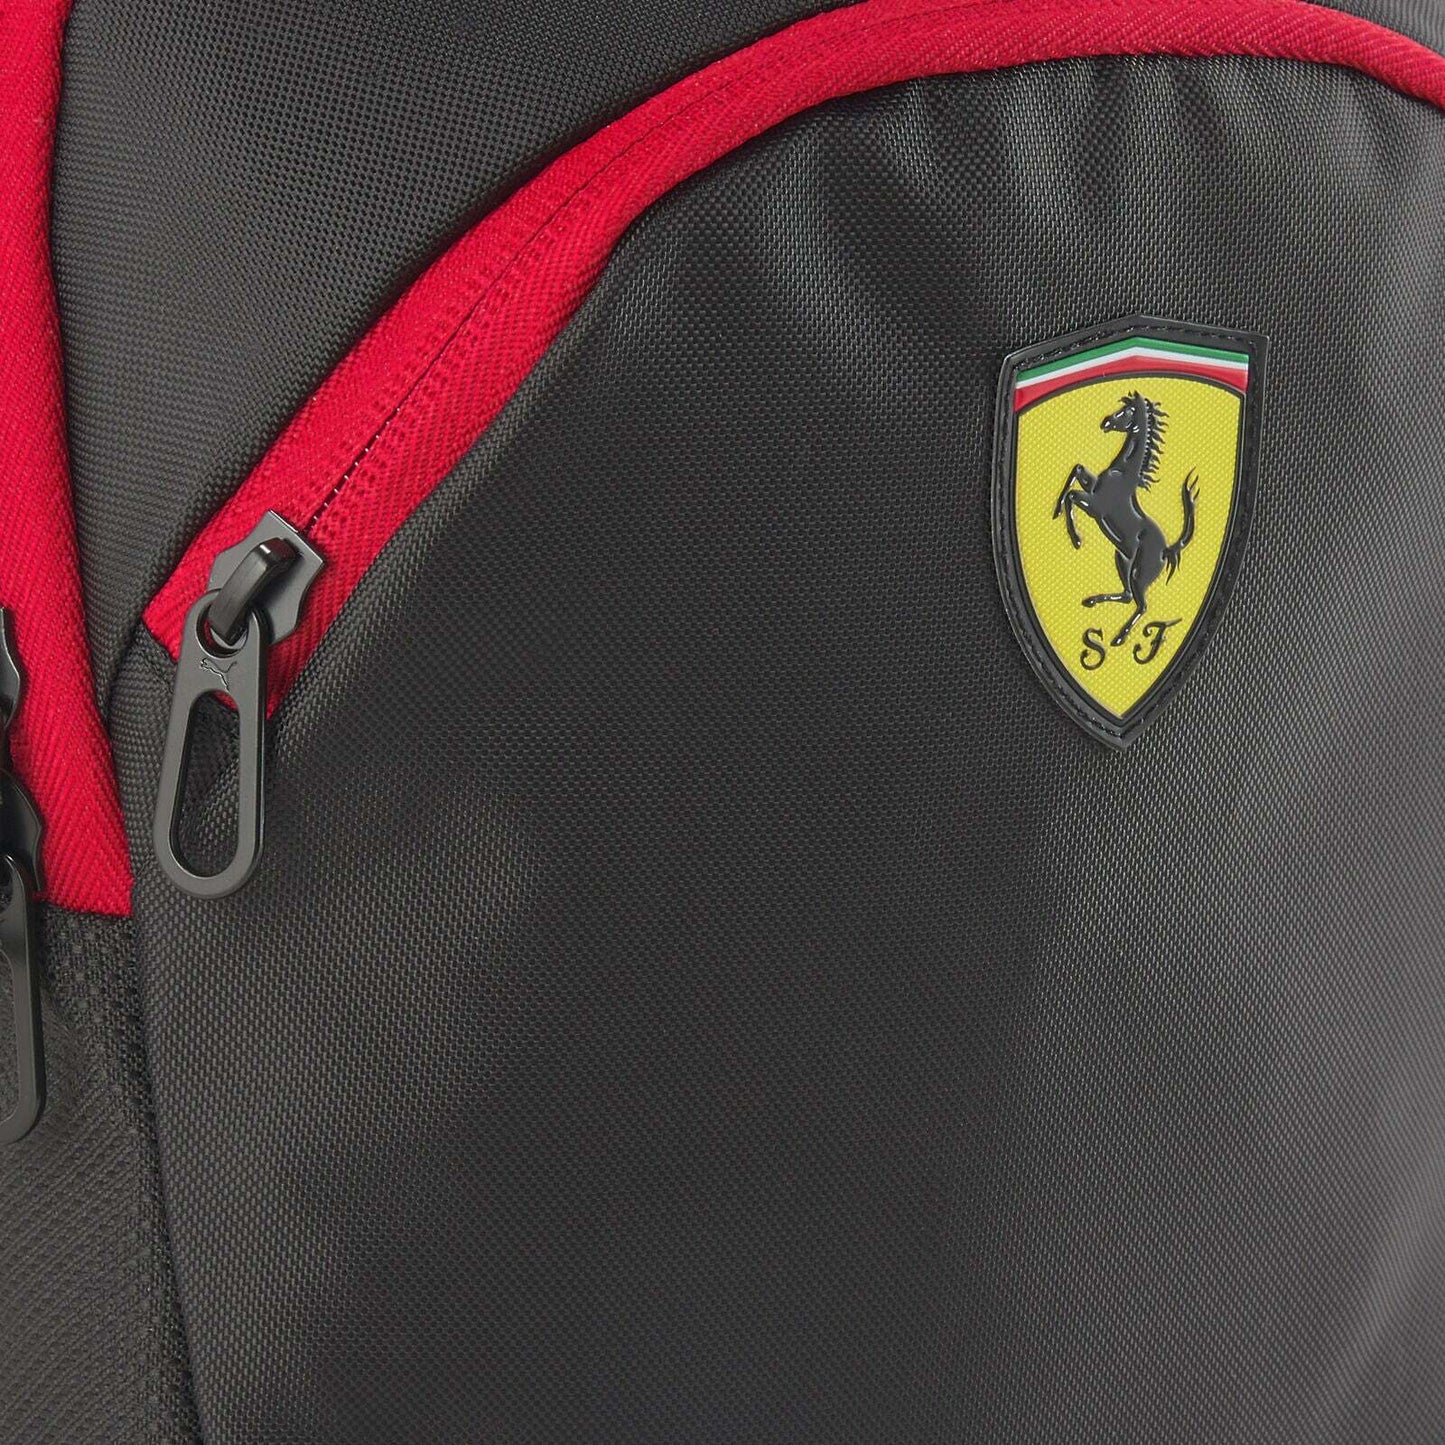 Scuderia Ferrari Puma Portable Bag - 078882 01